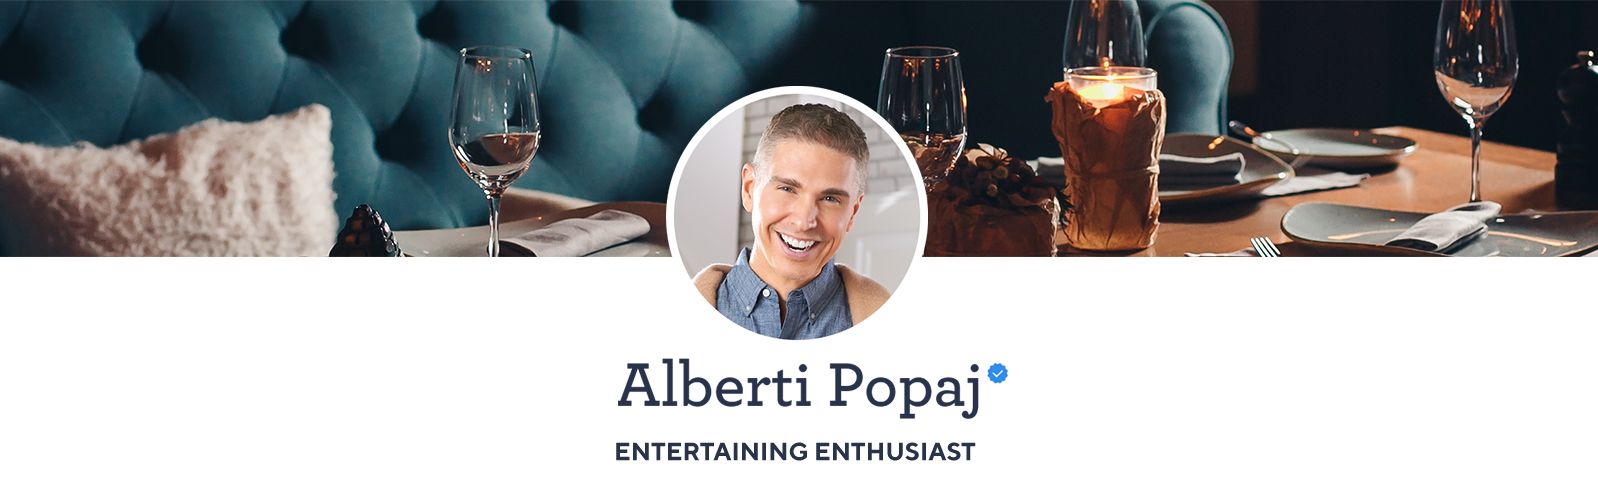 Alberti Popaj - Entertaining Enthusiast